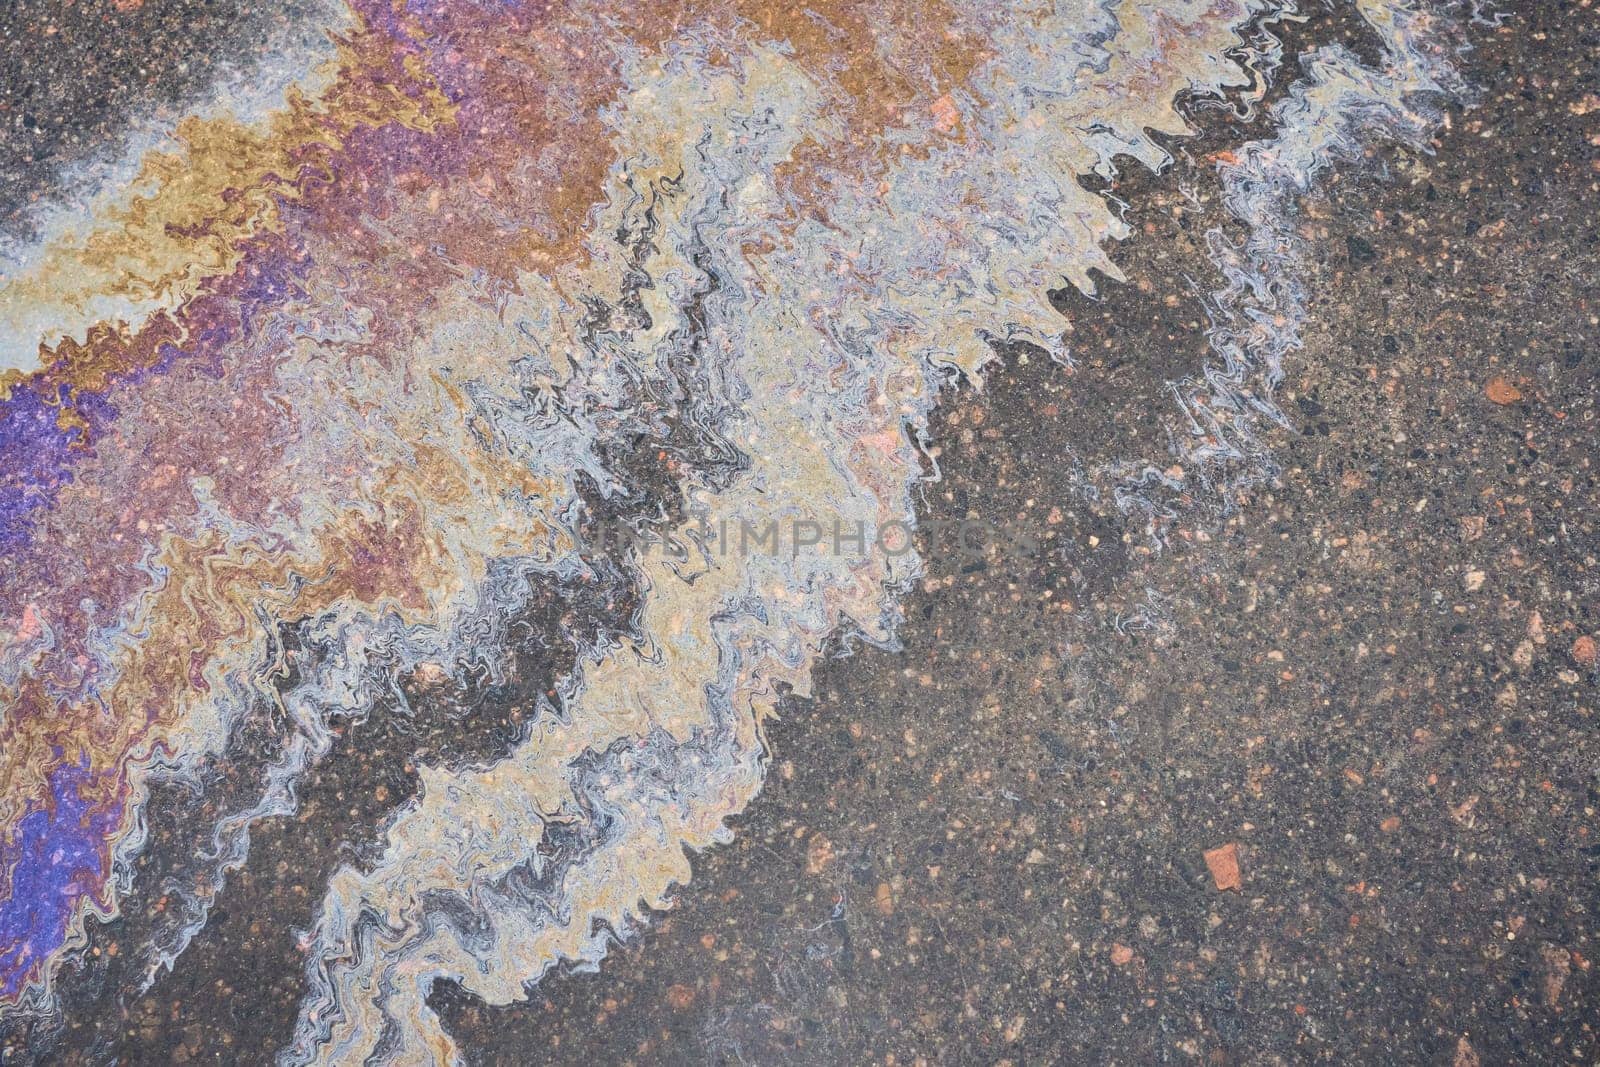 Oil Splotch on Asphalt, Colorful Gasoline Fuel Patterns on Road as Texture or Background by AliaksandrFilimonau